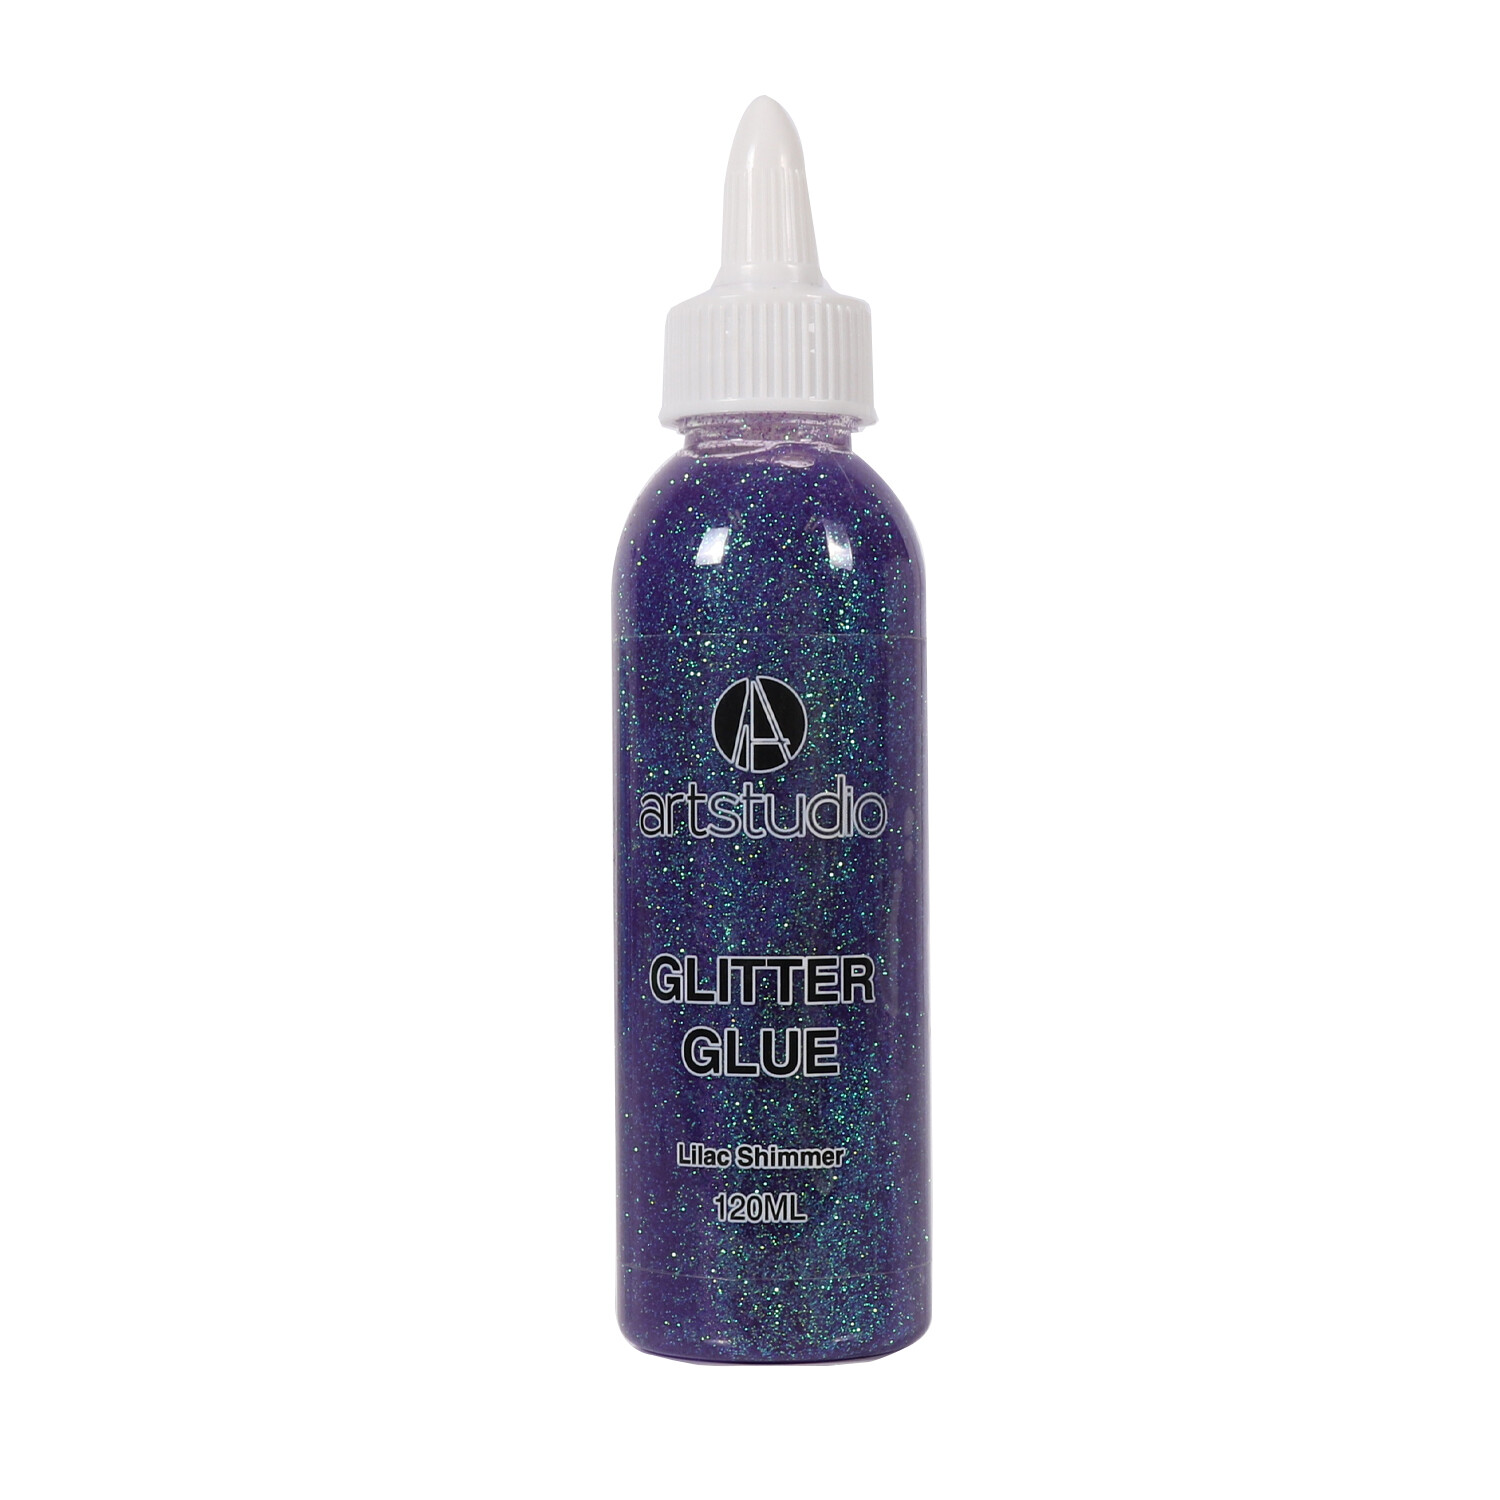 Art Studio Glitter Glue - Lilac Shimmer Image